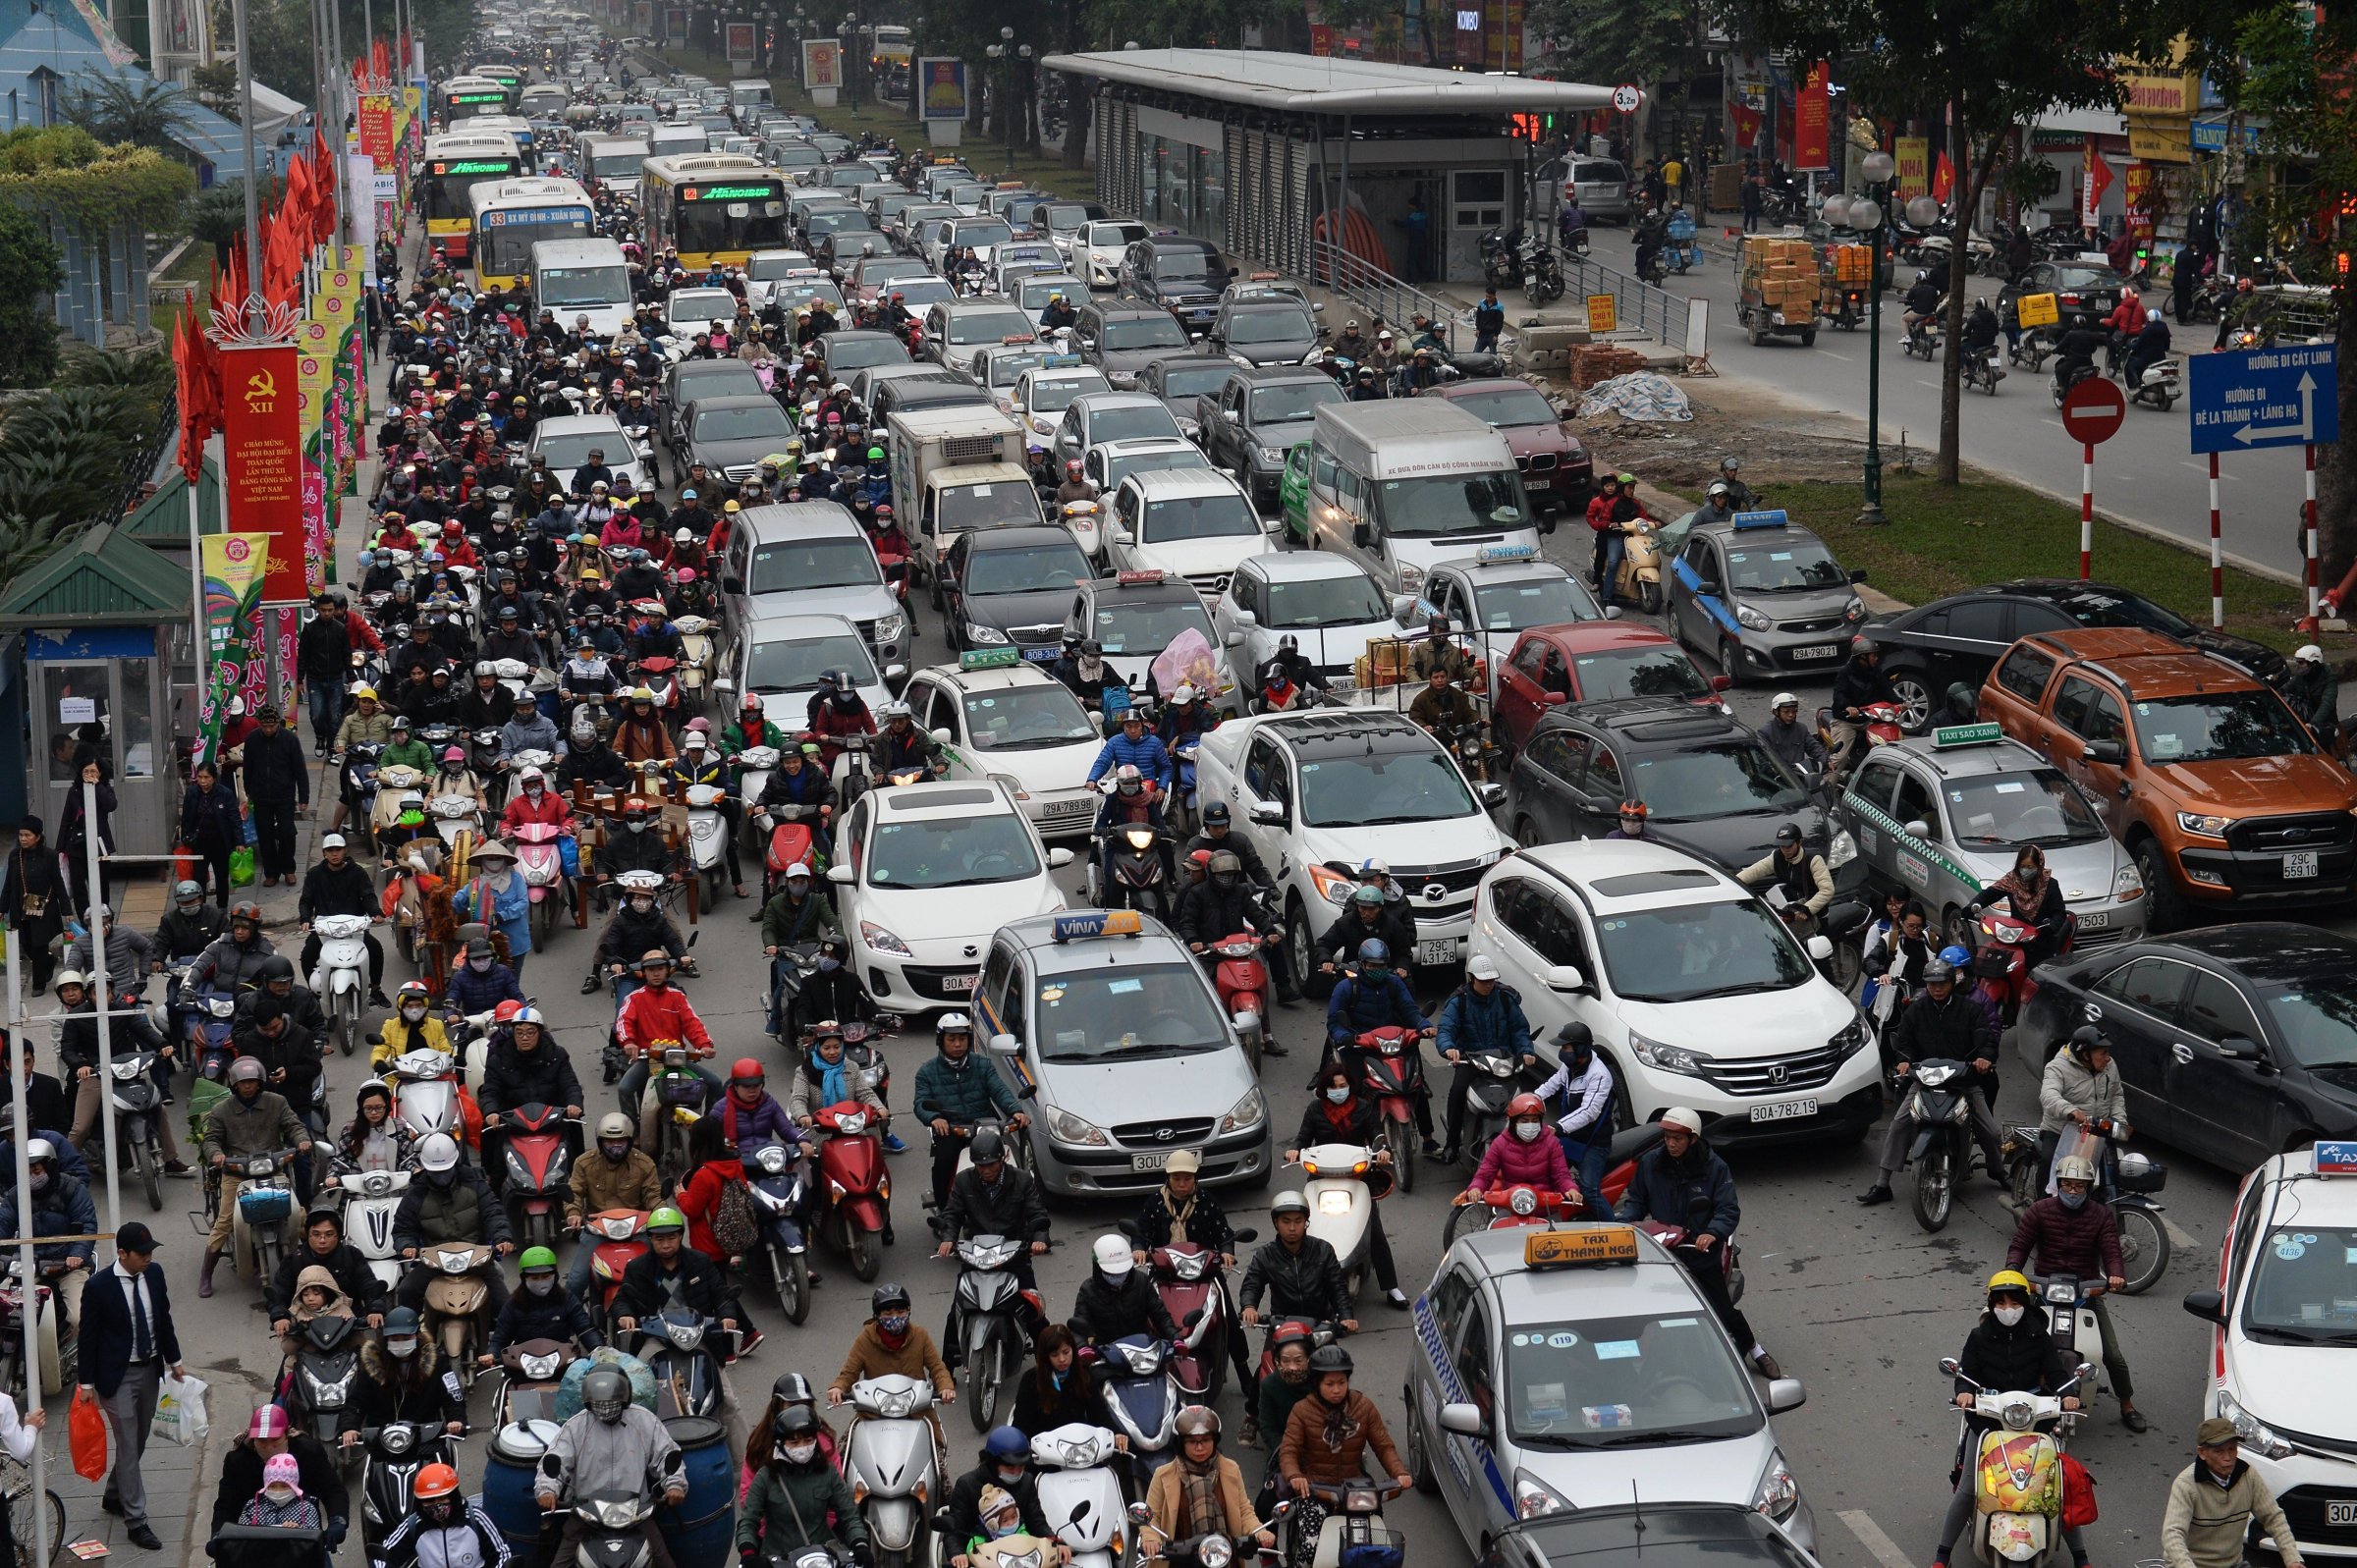 https://www.theguardian.com/cities/2016/jul/18/long-wait-hanoi-metro-vietnam-motorbike